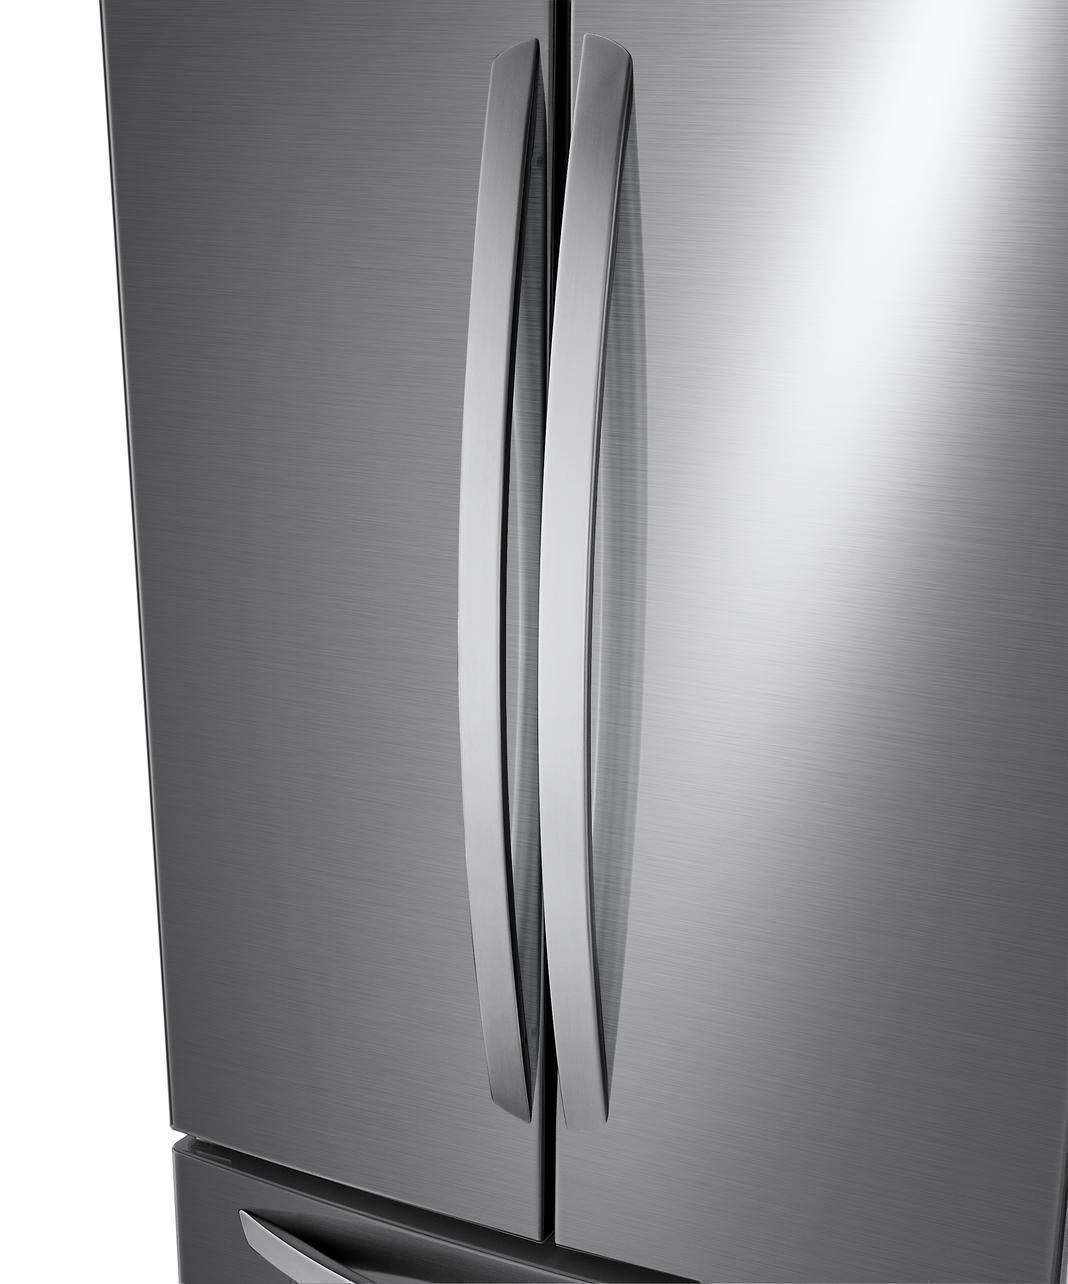 LG - 33 Inch 25.1 cu. ft French Door Refrigerator in Silver - LRFNS2503V